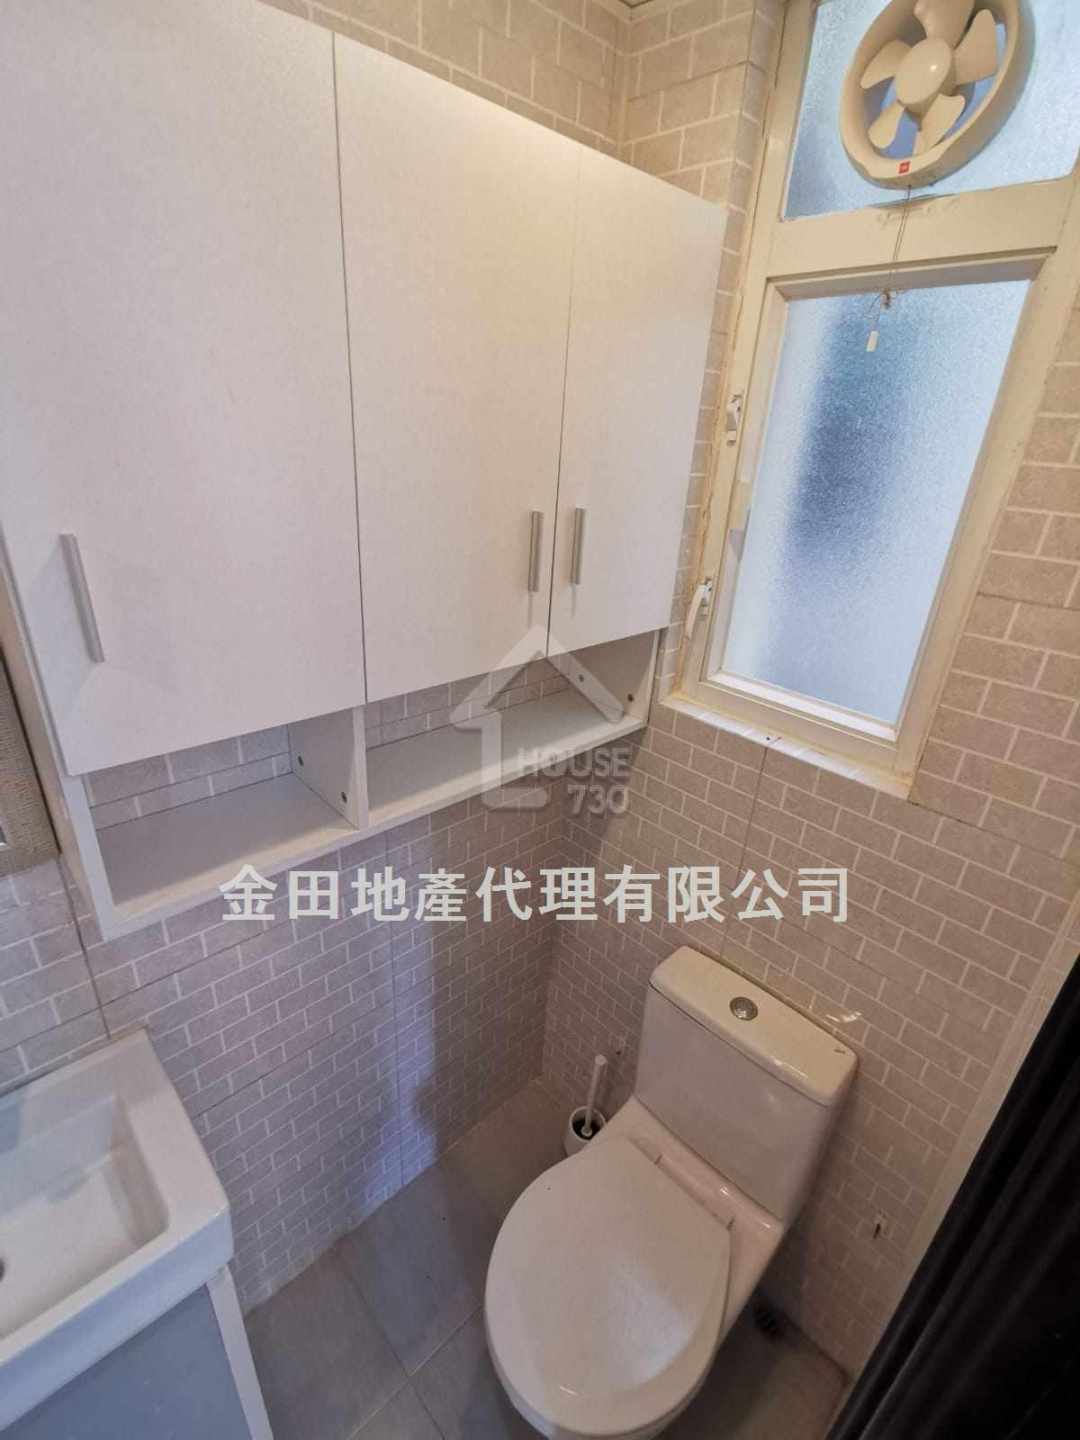 Wan Chai SUN TAO BUILDING Upper Floor Washroom House730-6282653